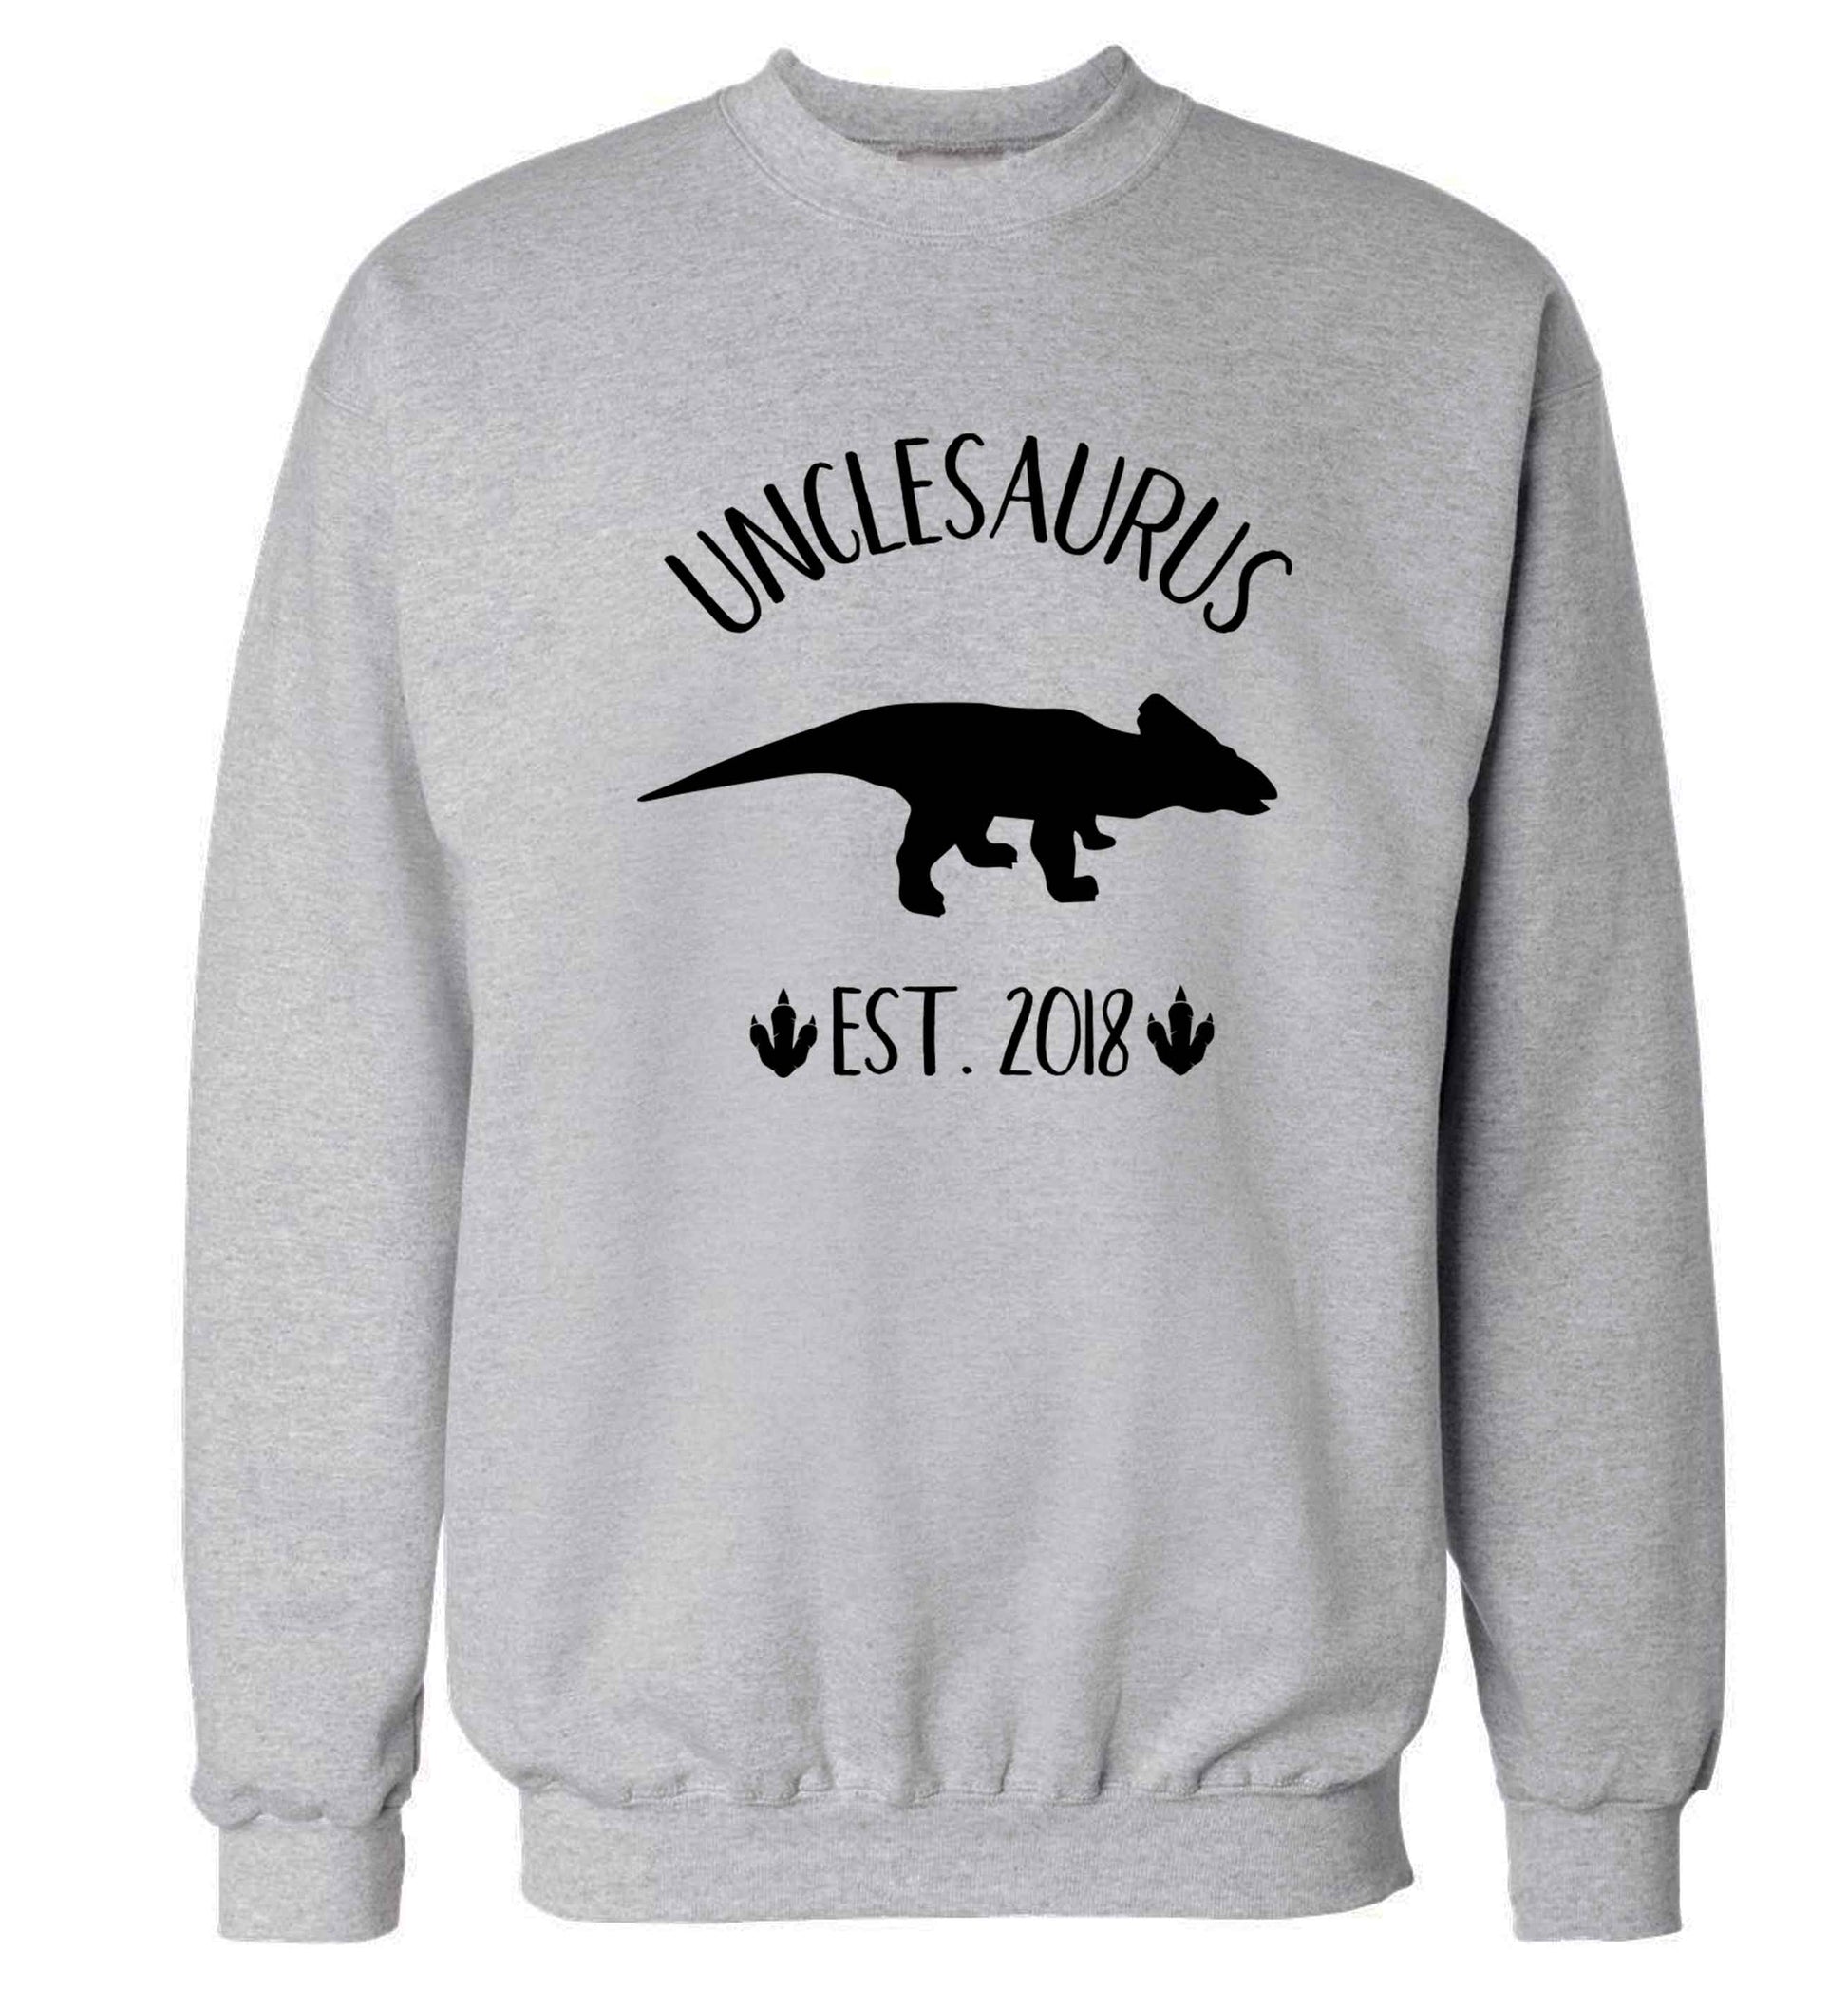 Personalised unclesaurus since (custom date) Adult's unisex grey Sweater 2XL